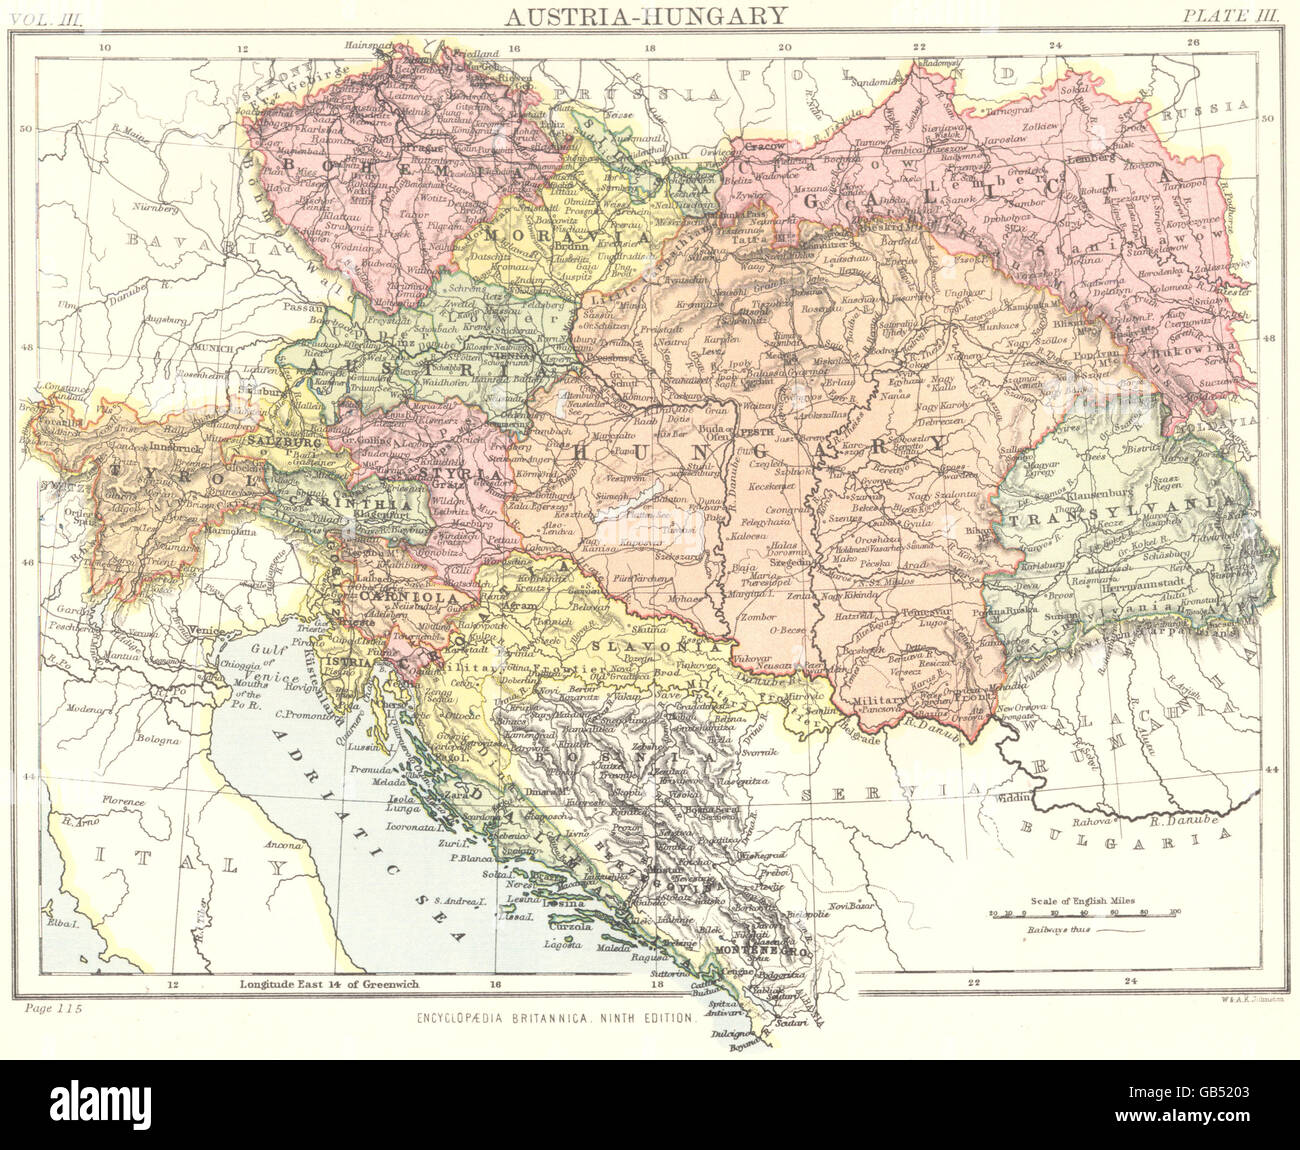 AUSTRIA-HUNGARY: Britannica 9. Auflage, 1898 Antike Landkarte Stockfoto